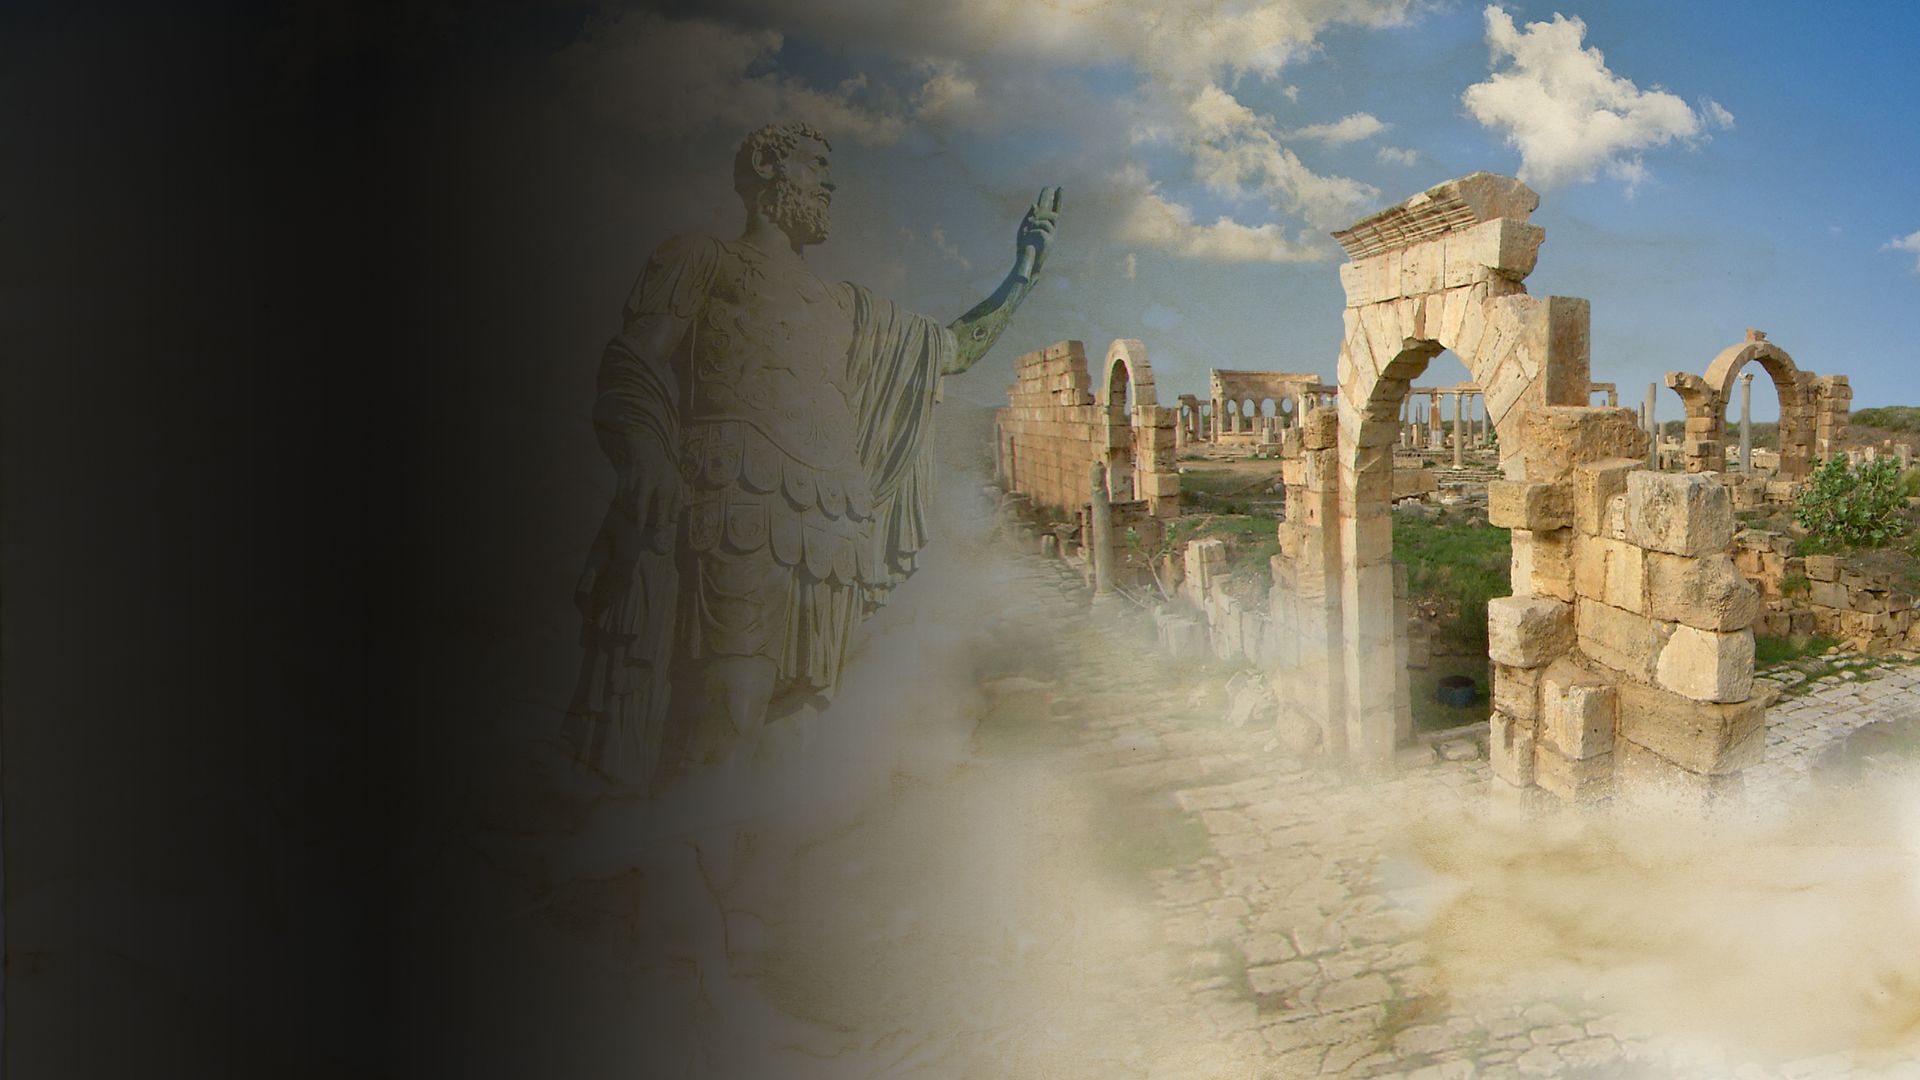 Leptis Magna: Rome in Africa